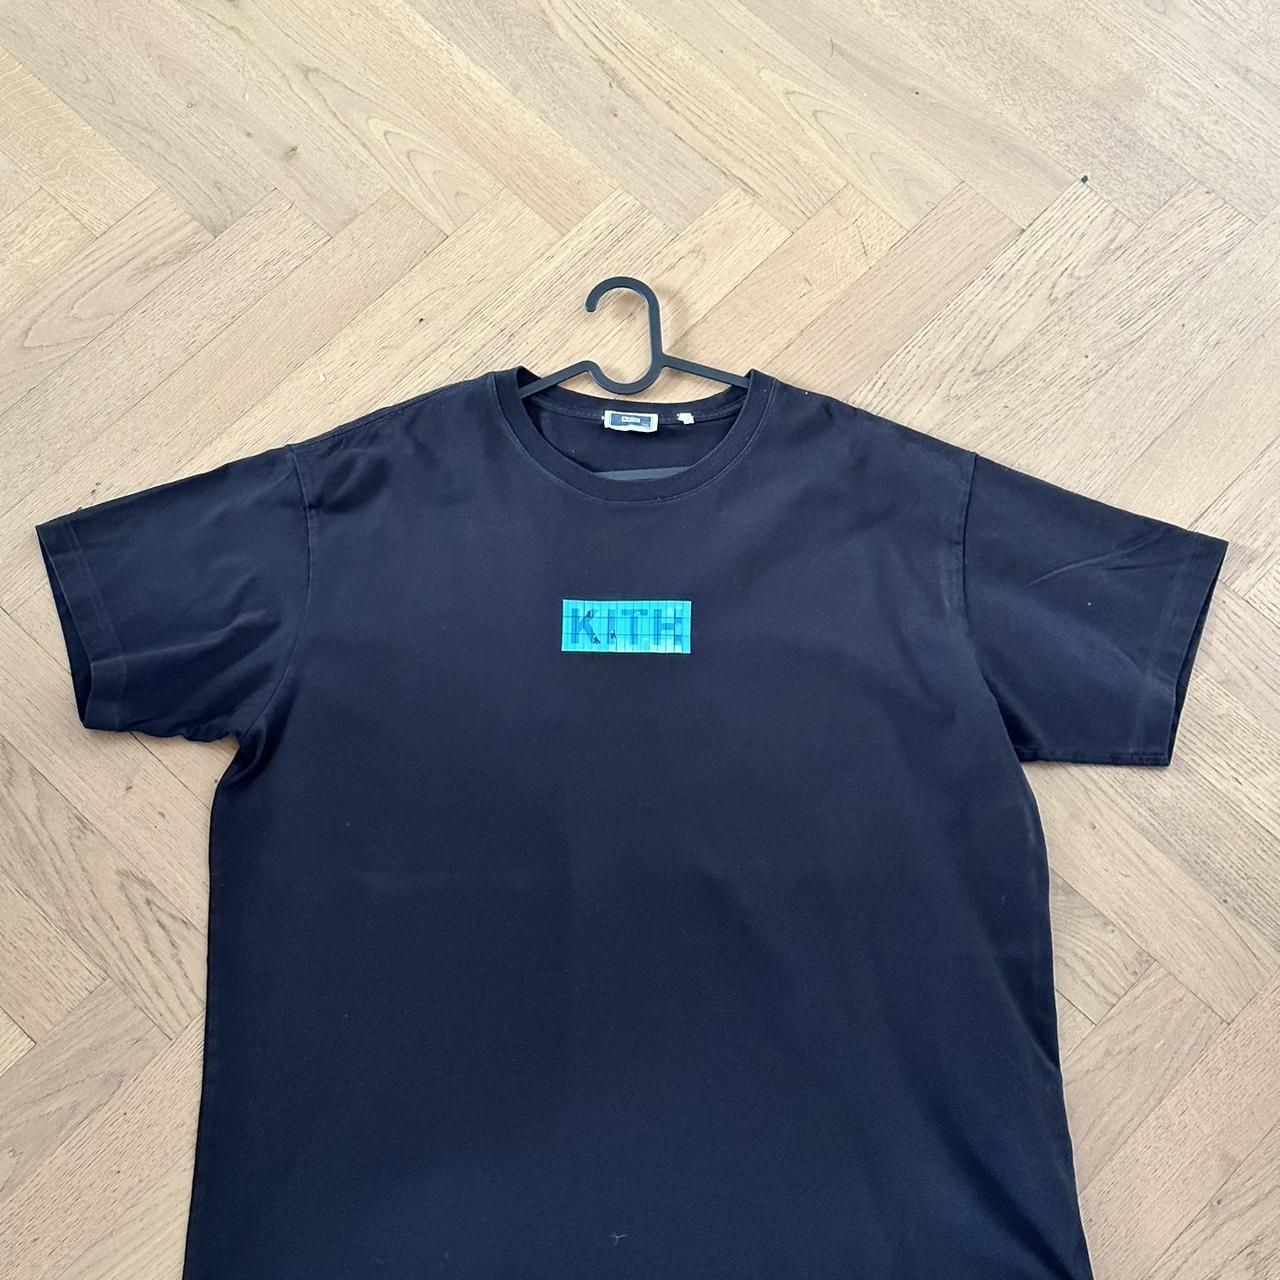 Xxl black kith T-shirt with men at work logo - Depop